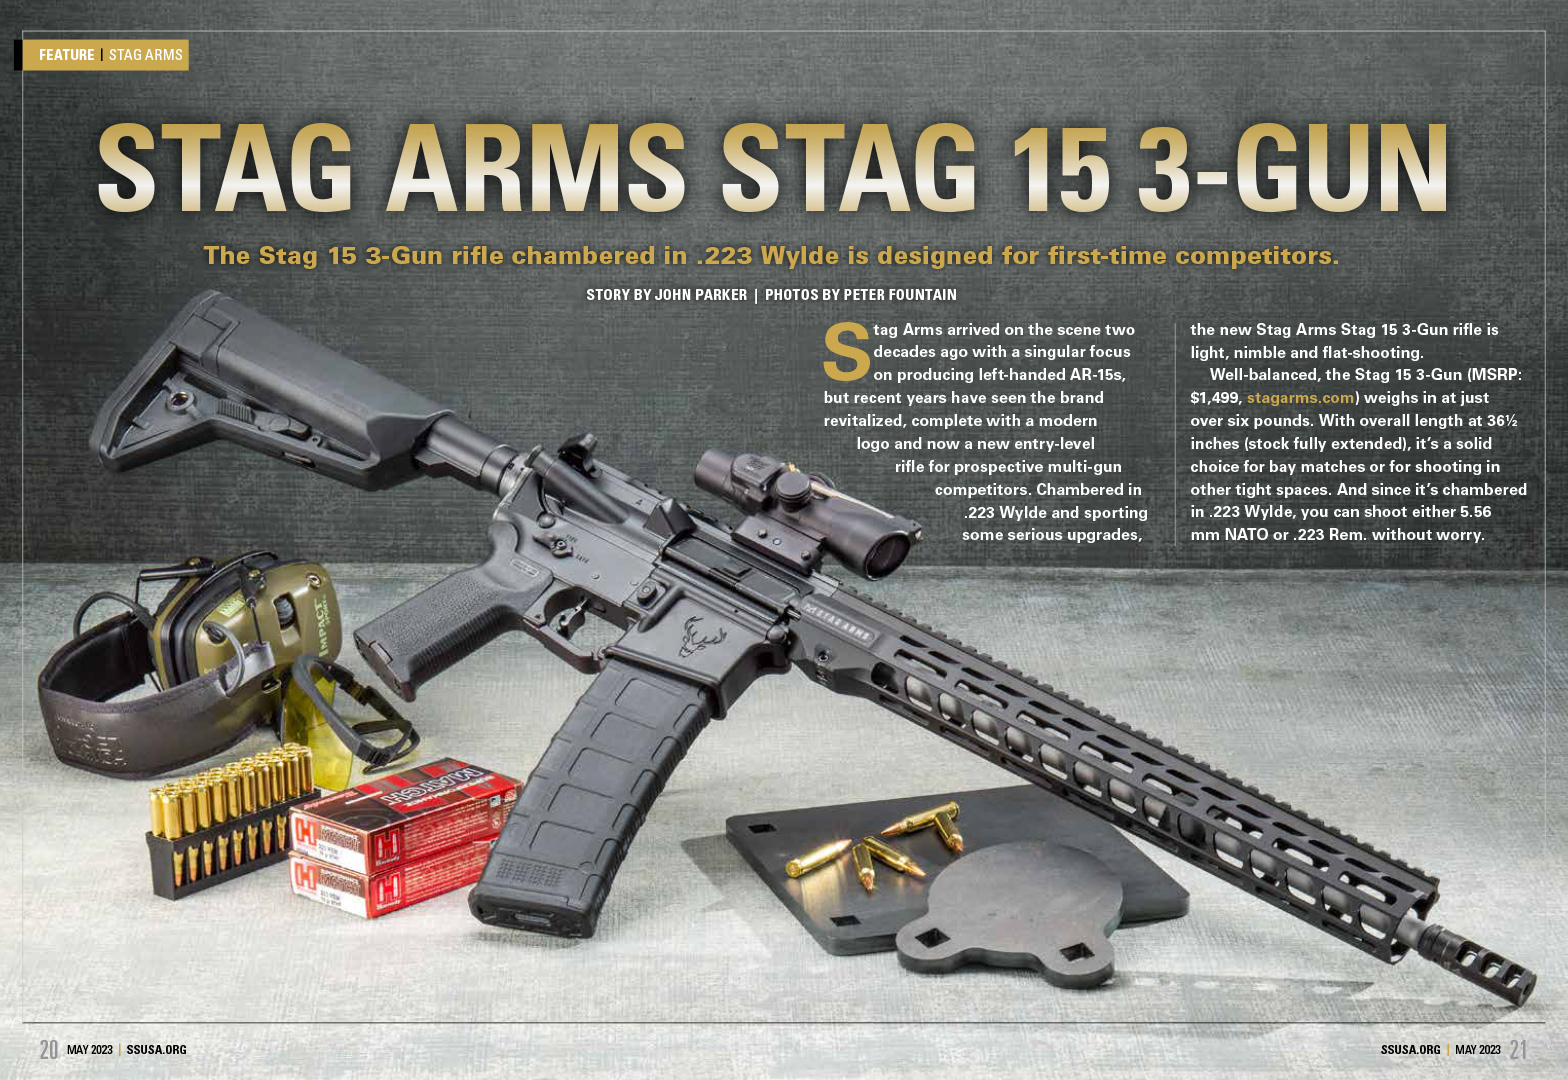 Stag 15 3-Gun